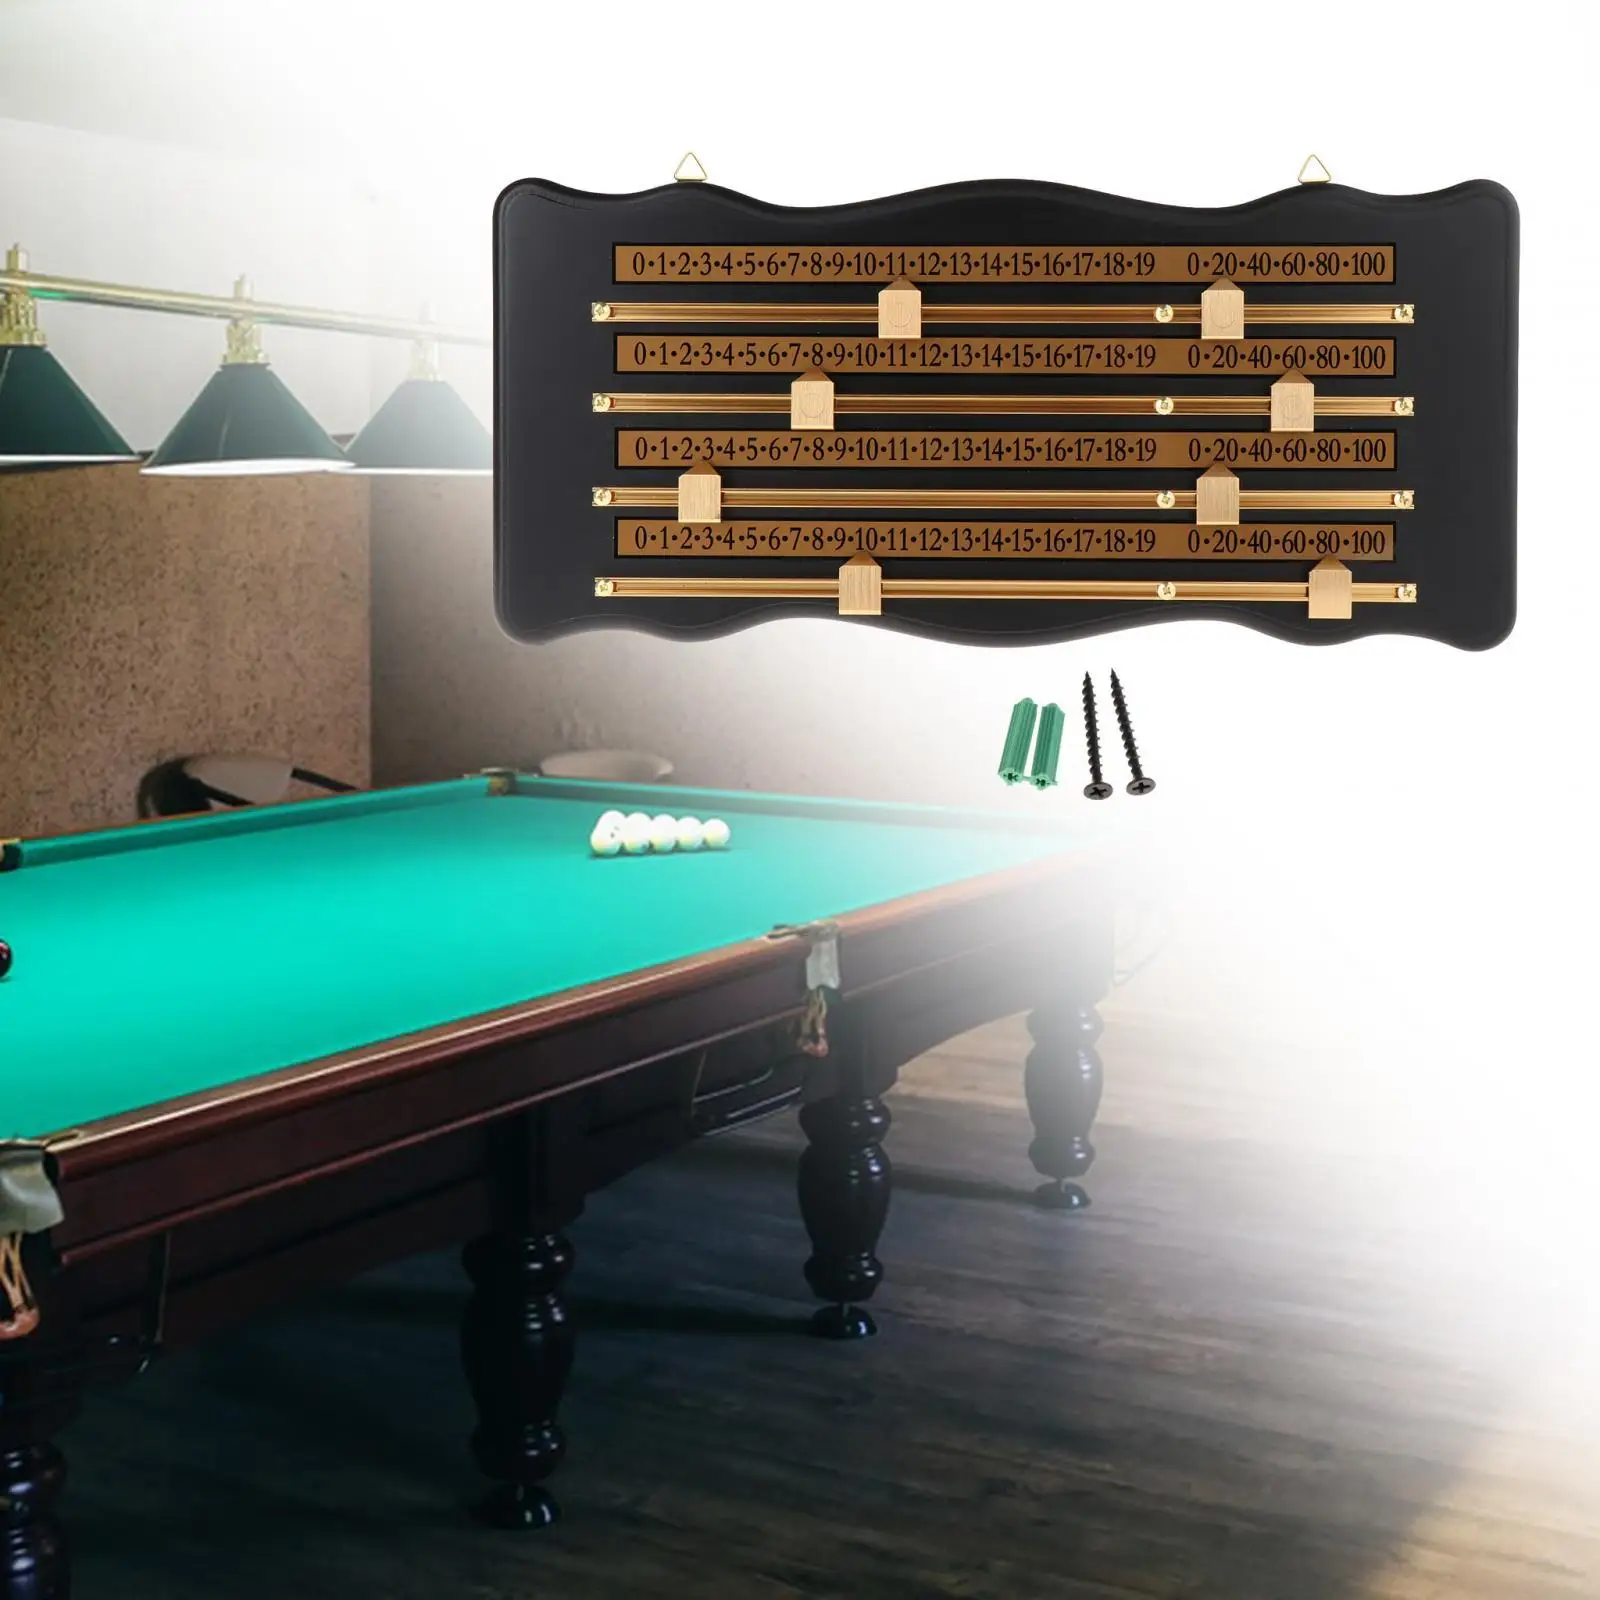 

Shuffleboard Scoreboard Player with Mounting Screws Supplies Wood Game Snooker Billiard Score Board Score Keeper Scoring Board